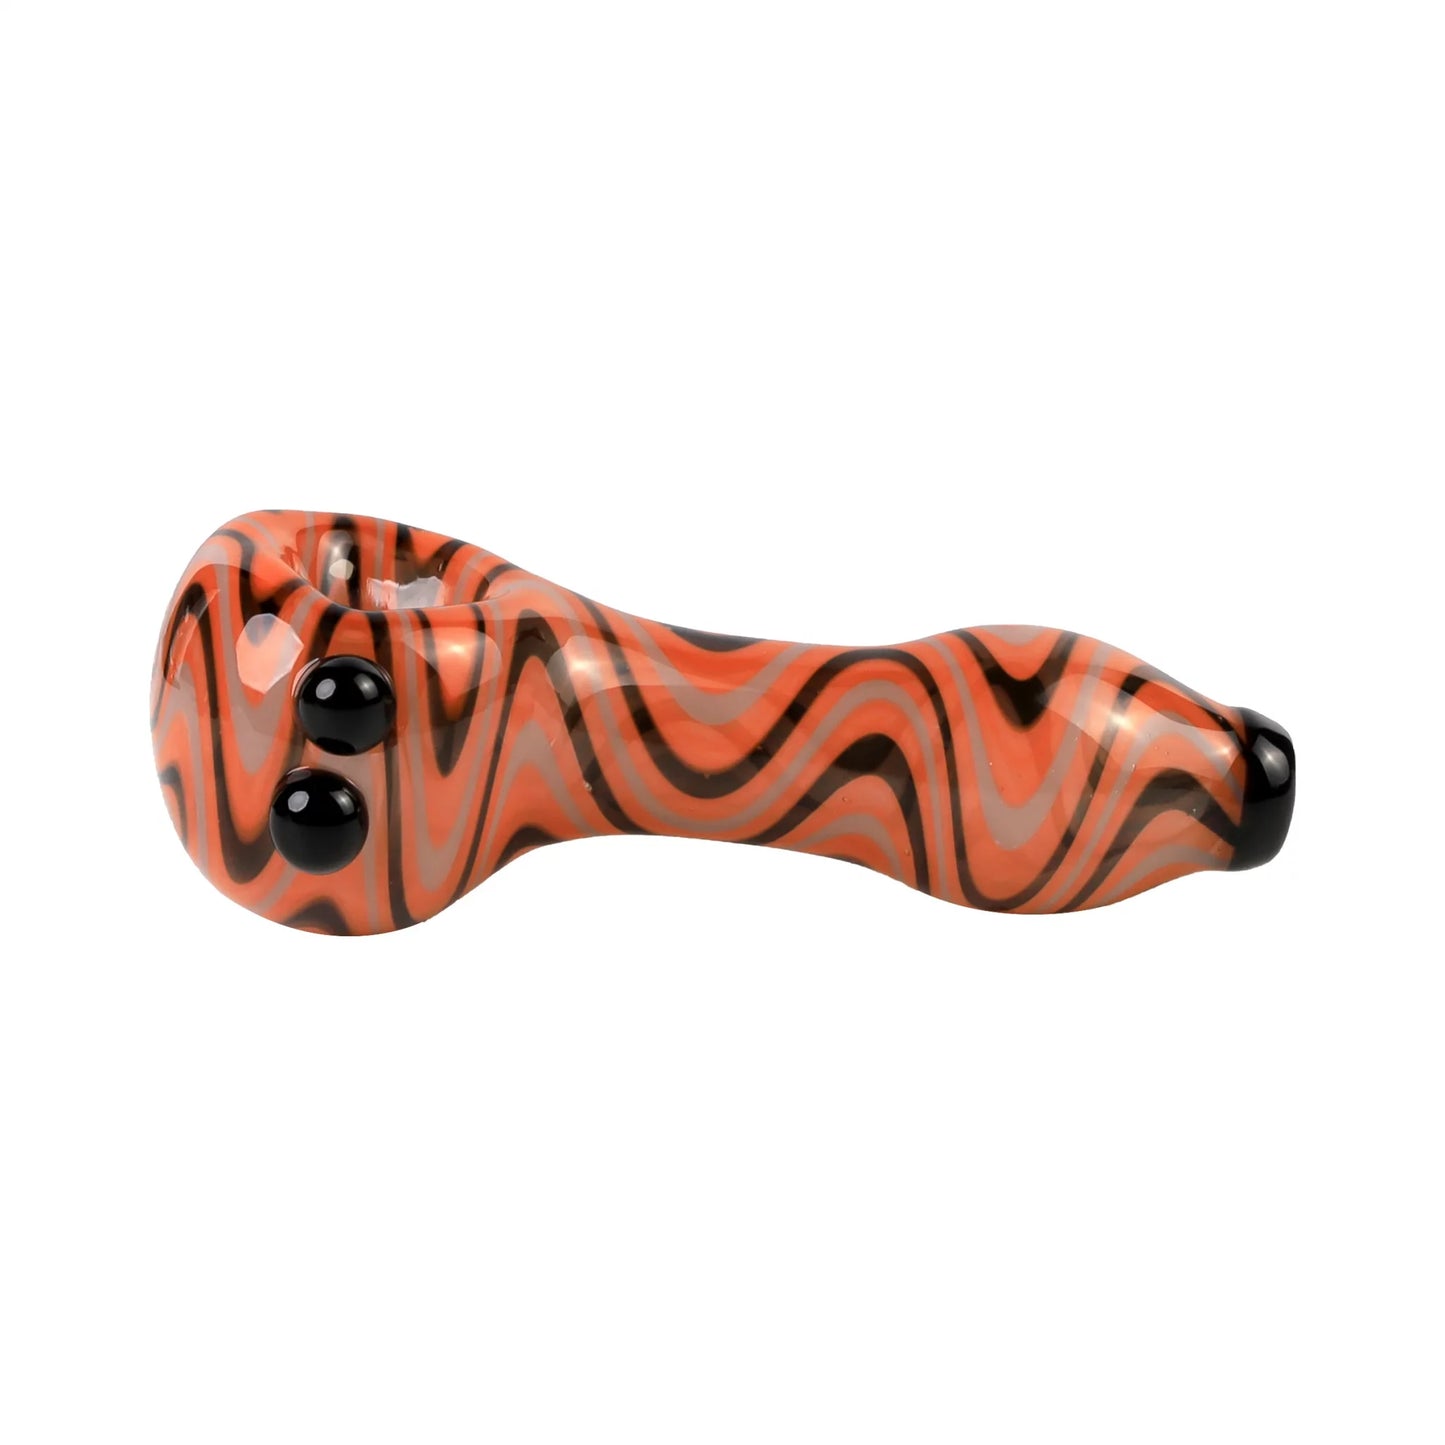 Hurricane Glass Pipe (Orange/Black)